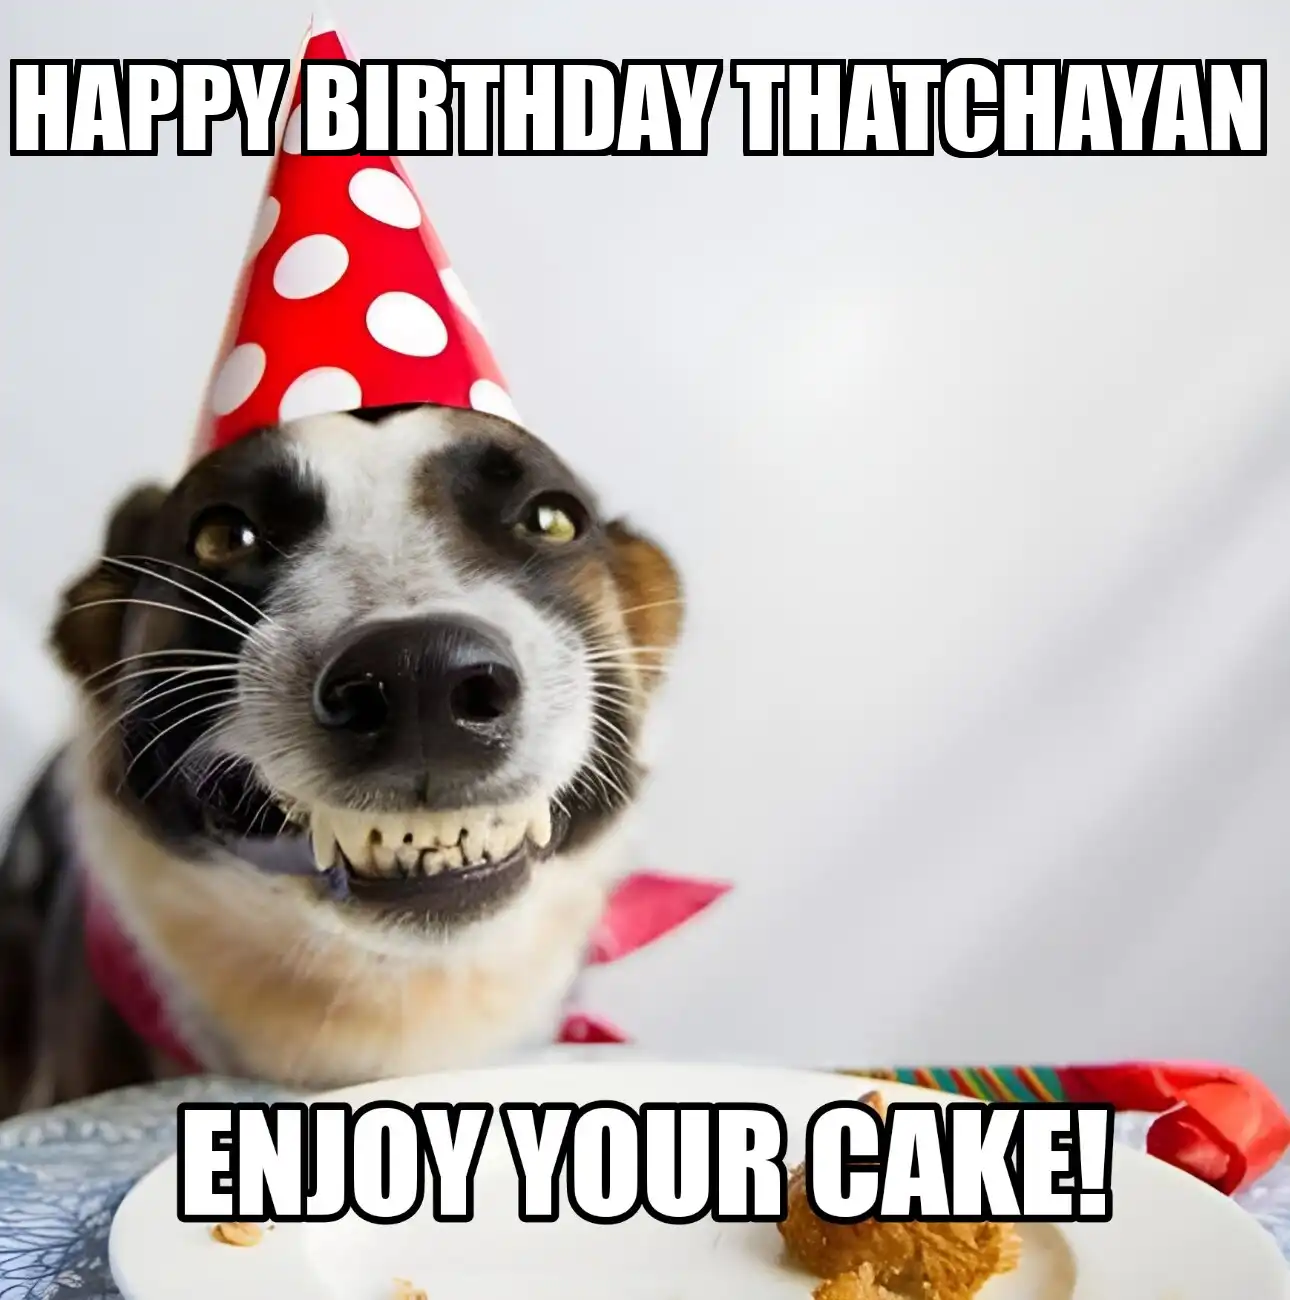 Happy Birthday Thatchayan Enjoy Your Cake Dog Meme